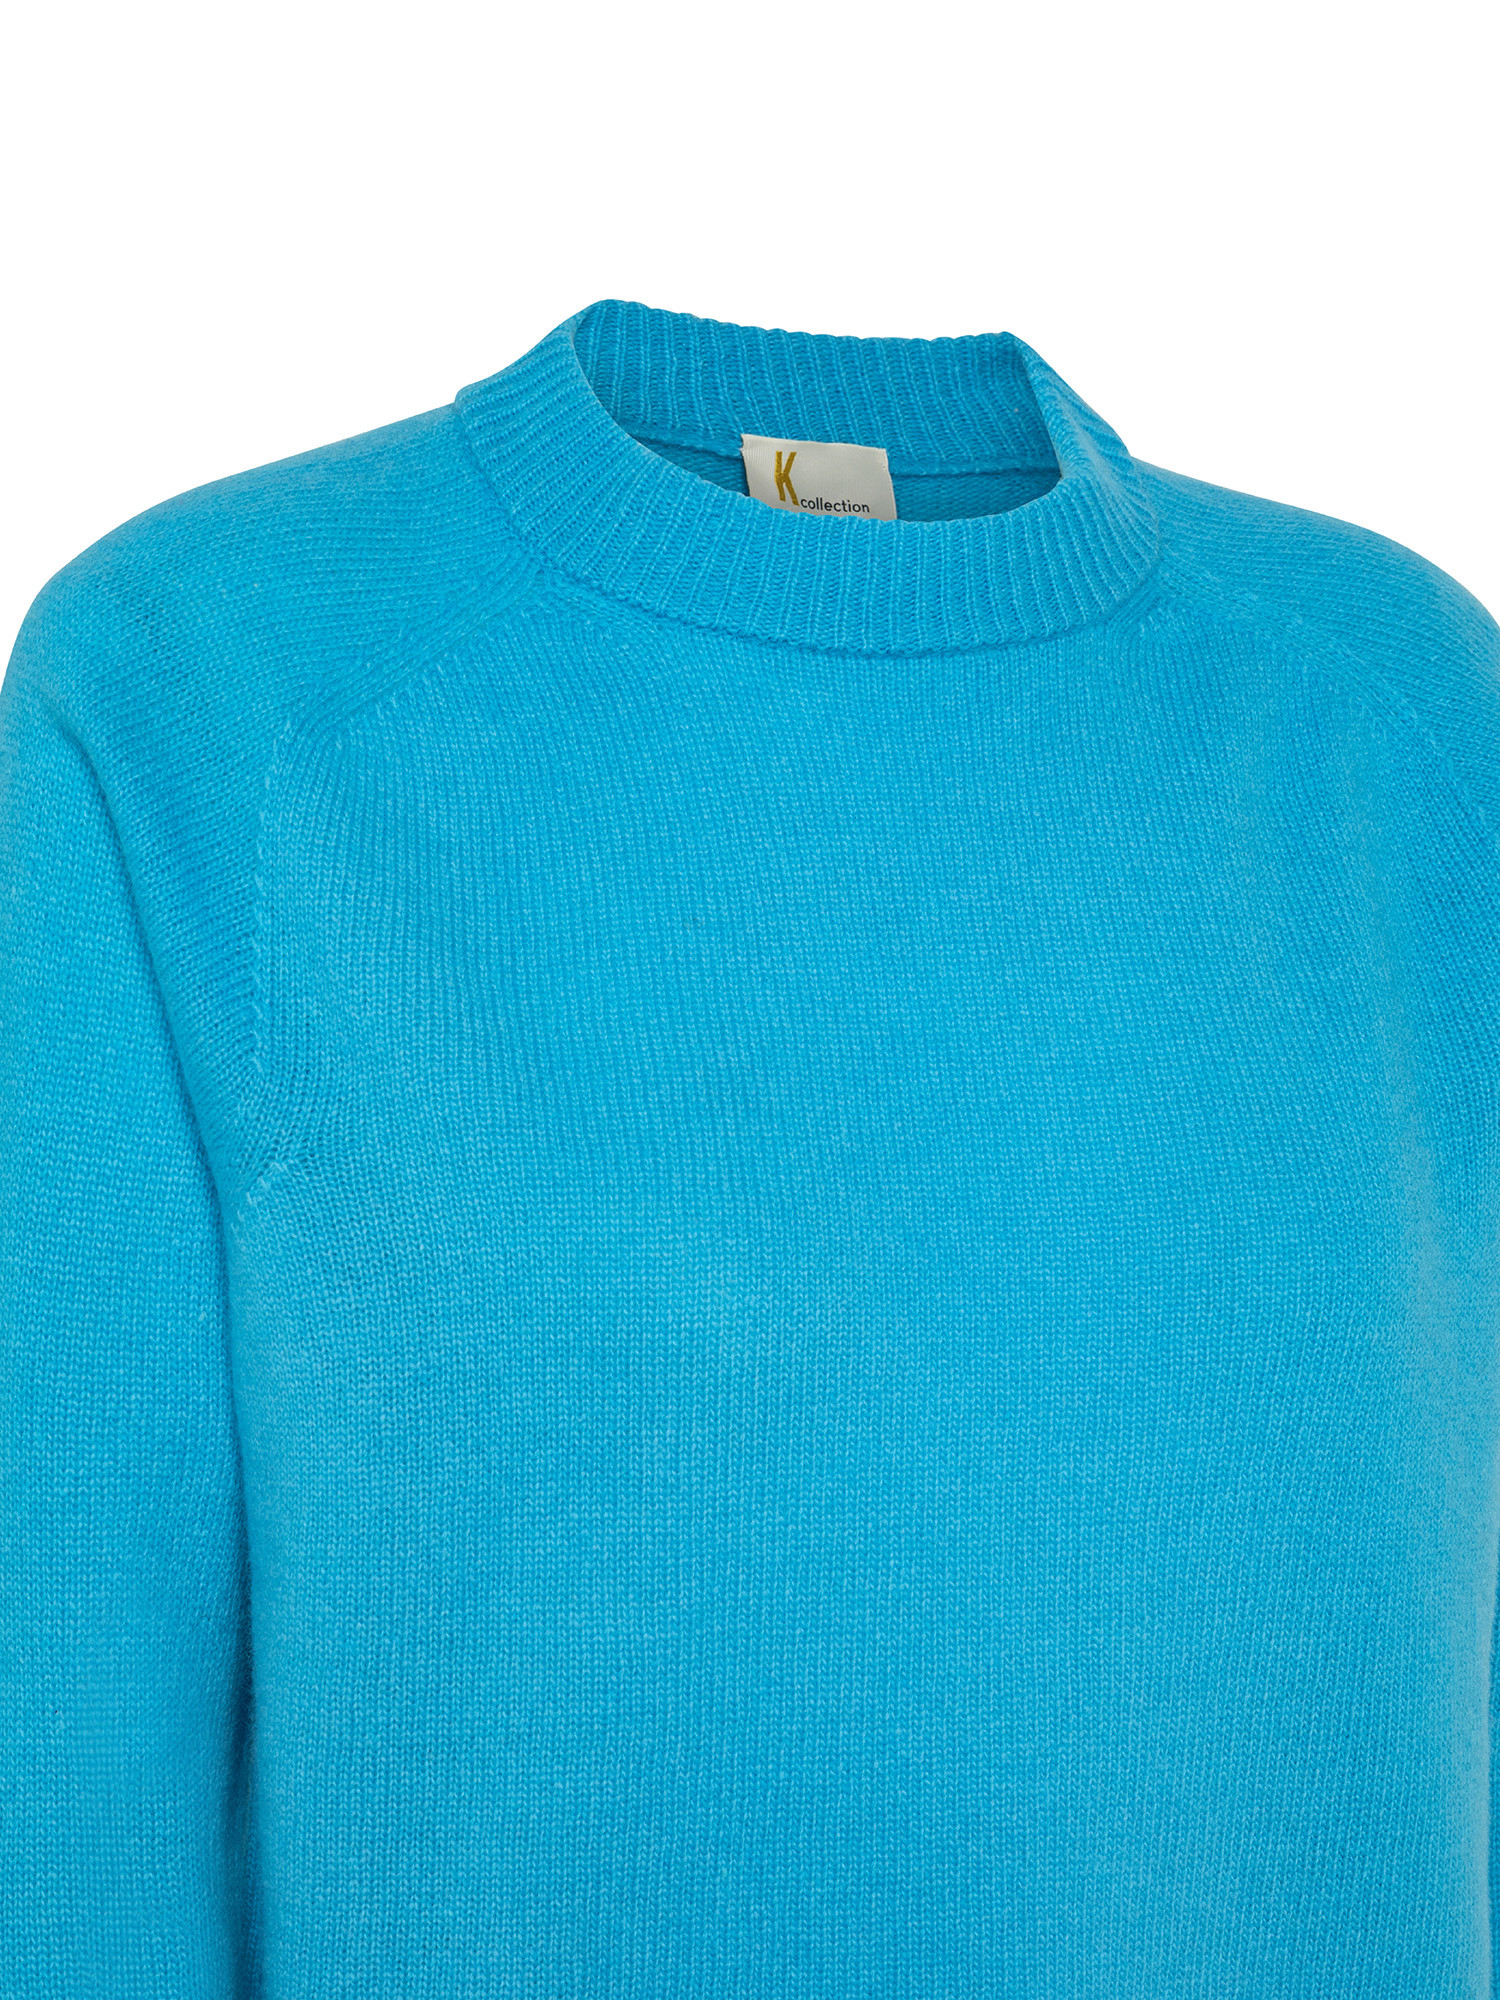 K Collection - Crewneck sweater, Light Blue, large image number 2